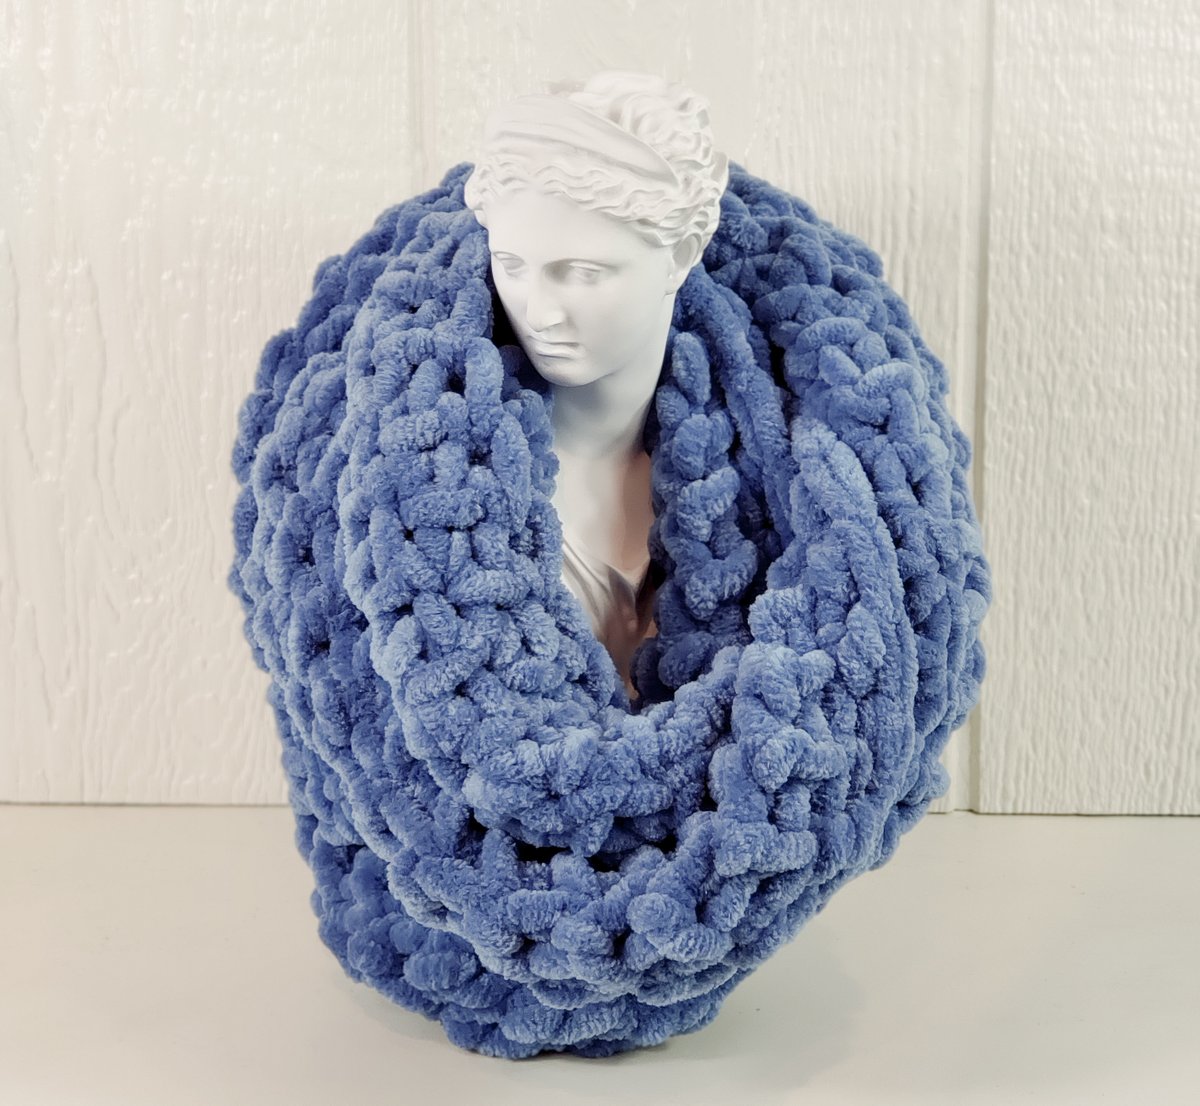 NEW ITEM
25% Off ALL Shop Items Until December 15, 2023
A Warm Loving Hug - Handmade Crochet Chenille Infinity Scarf | by 2DogzArt etsy.me/46O8XSE via @Etsy 
#denimblueinfinityscarf
#giftofawarmlovinghug
#giftsunder25
#shophandmadegifts
#shopsmallbusiness
#shop2DogzArt